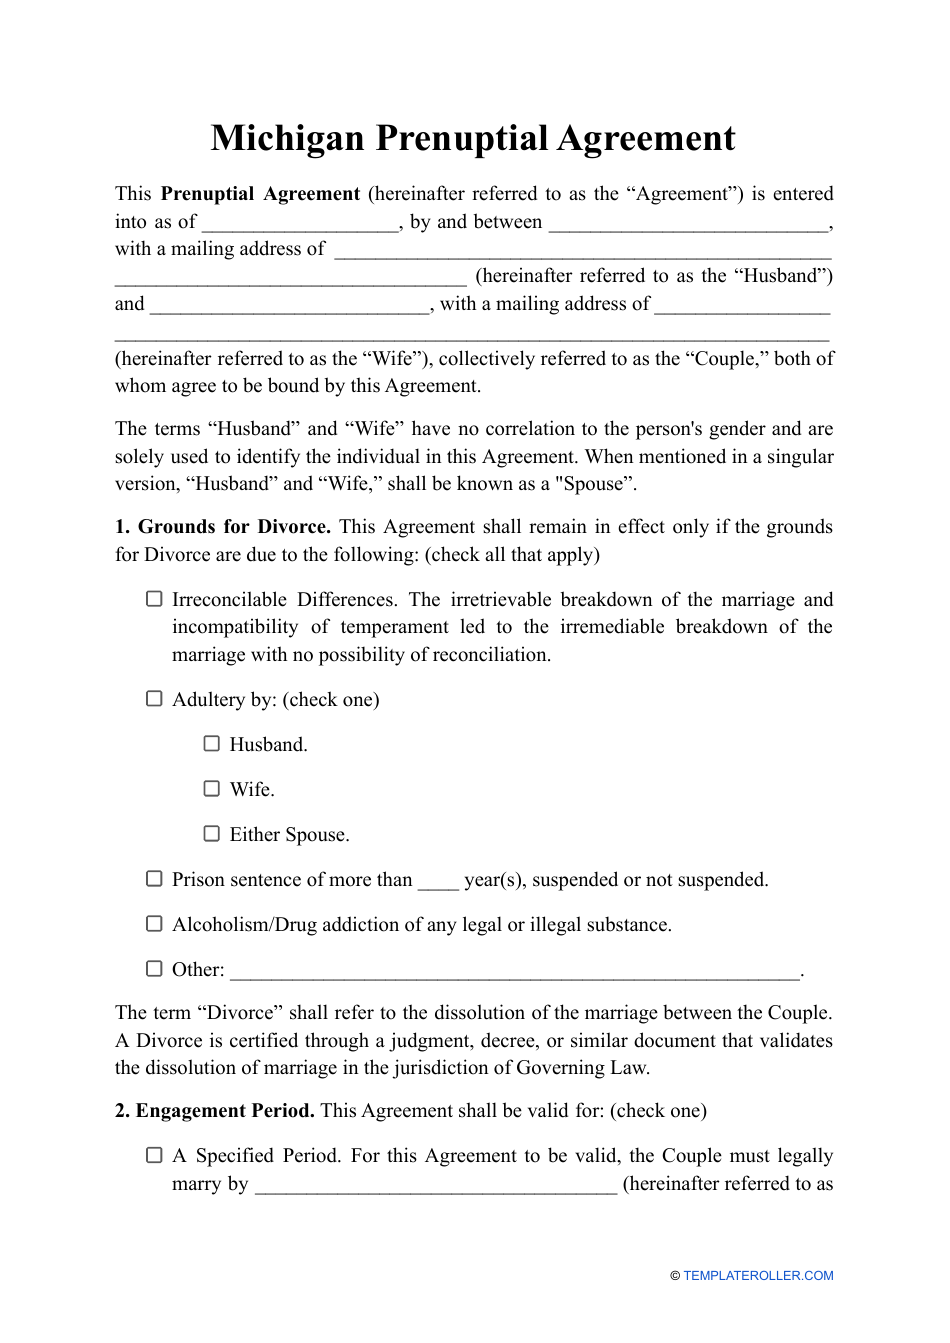 Prenuptial Agreement Template - Michigan, Page 1